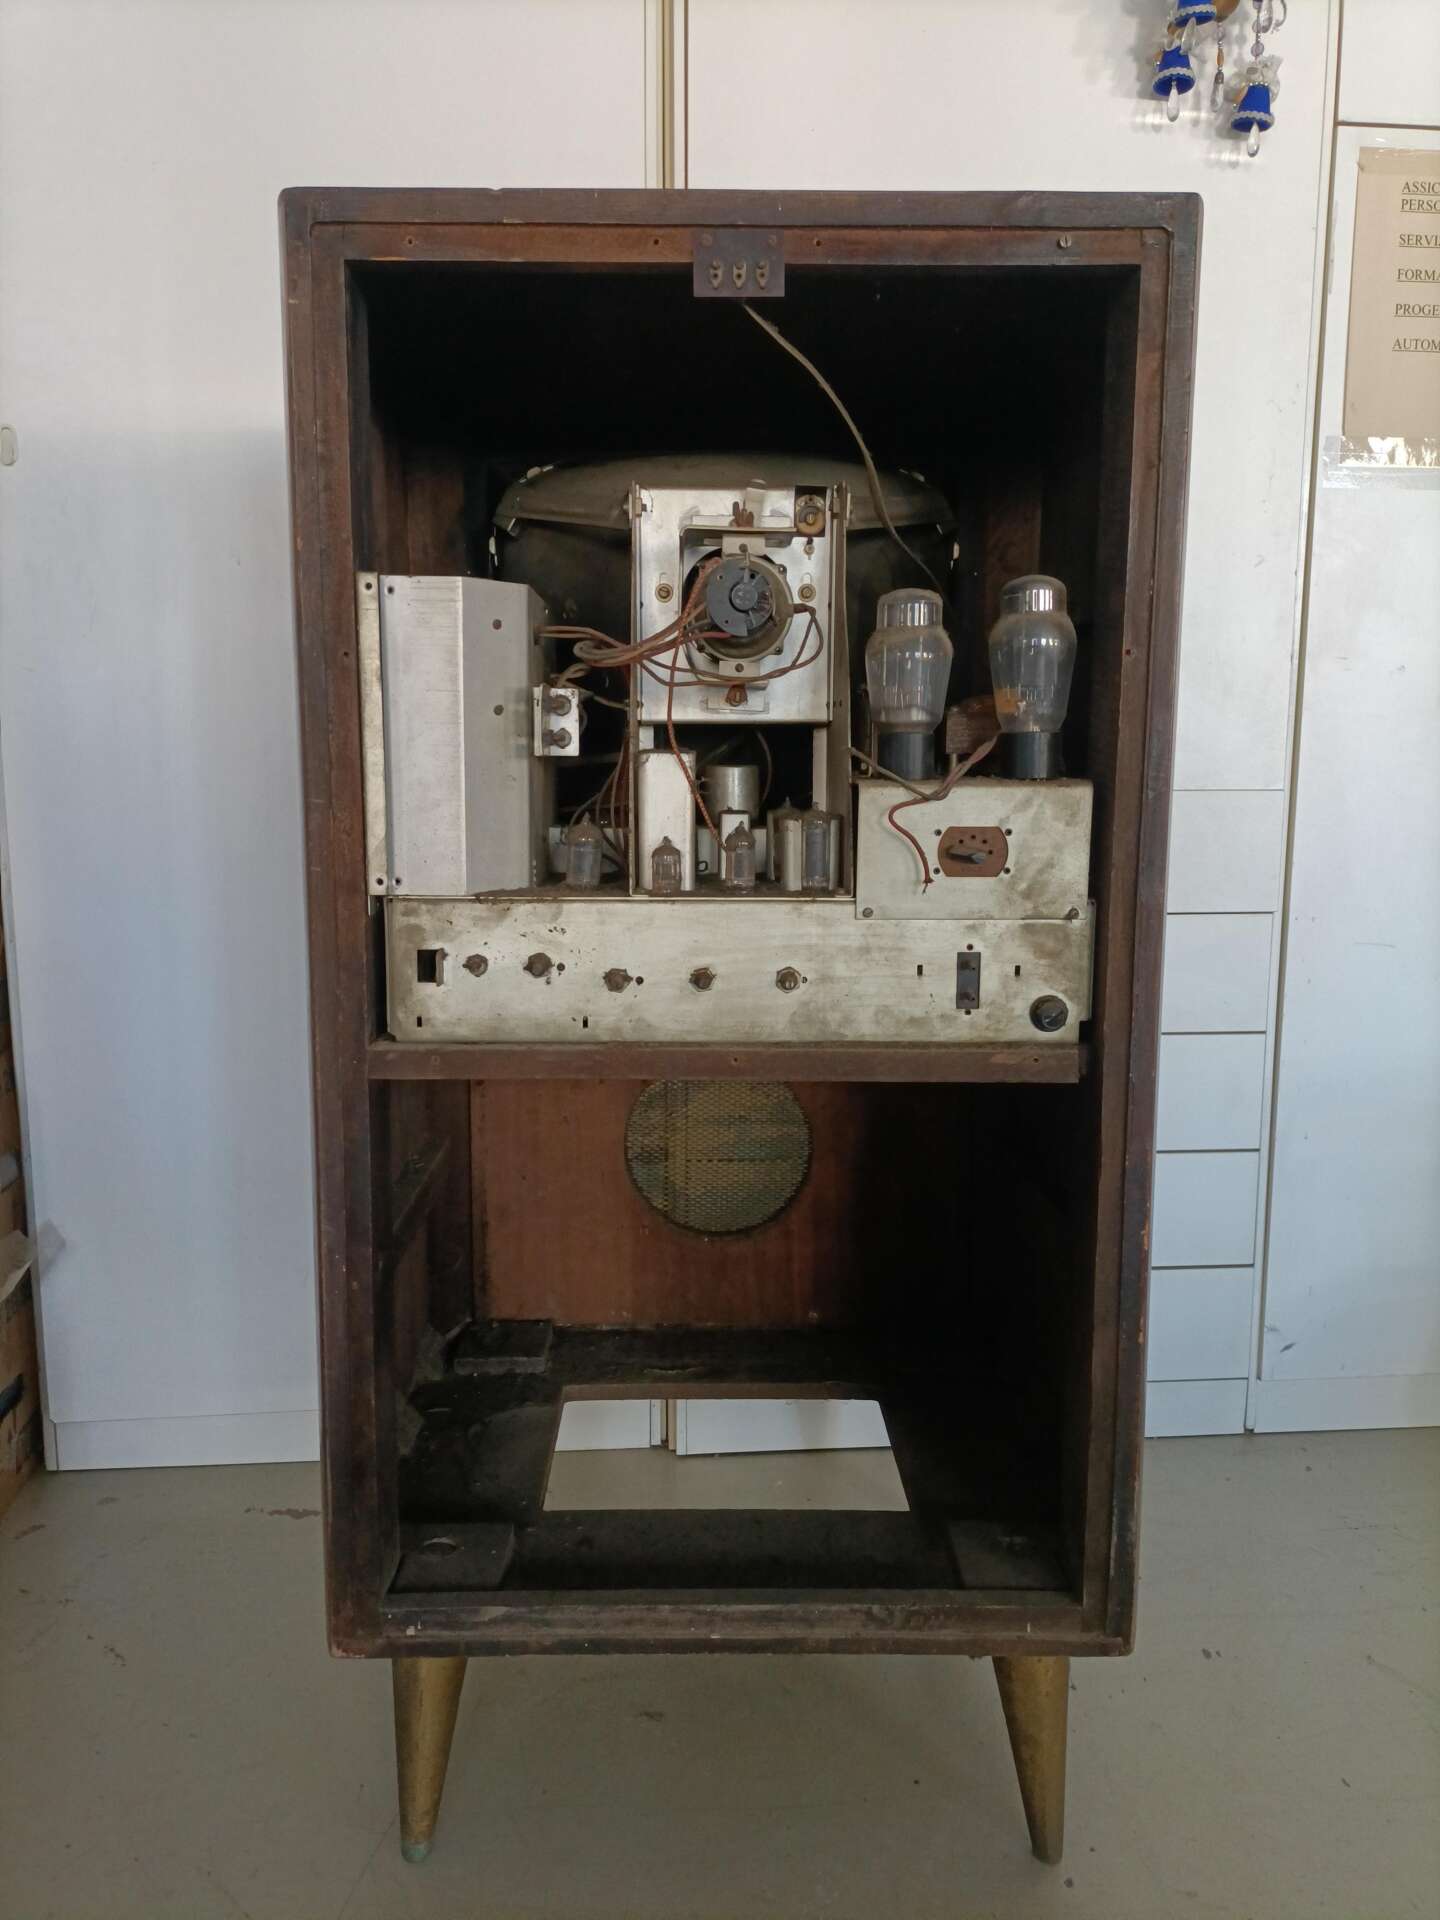 TV Radiomarelli anni 50